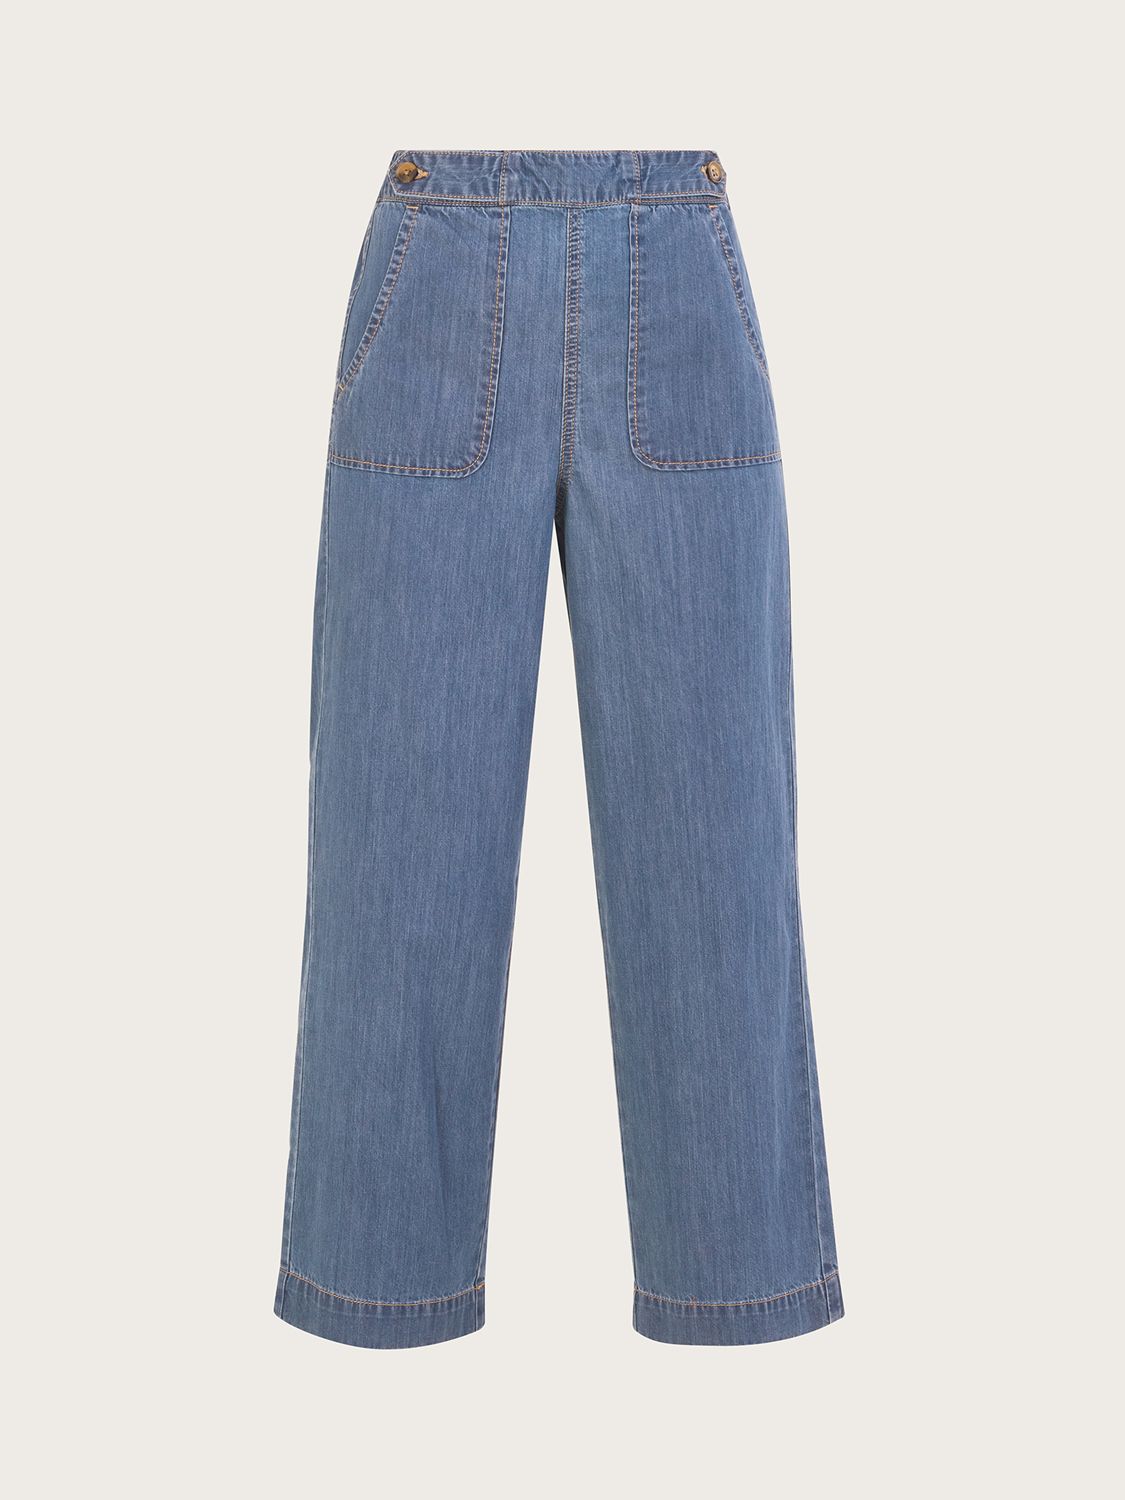 Monsoon Harper Crop Wide Jeans, Denim Blue at John Lewis & Partners